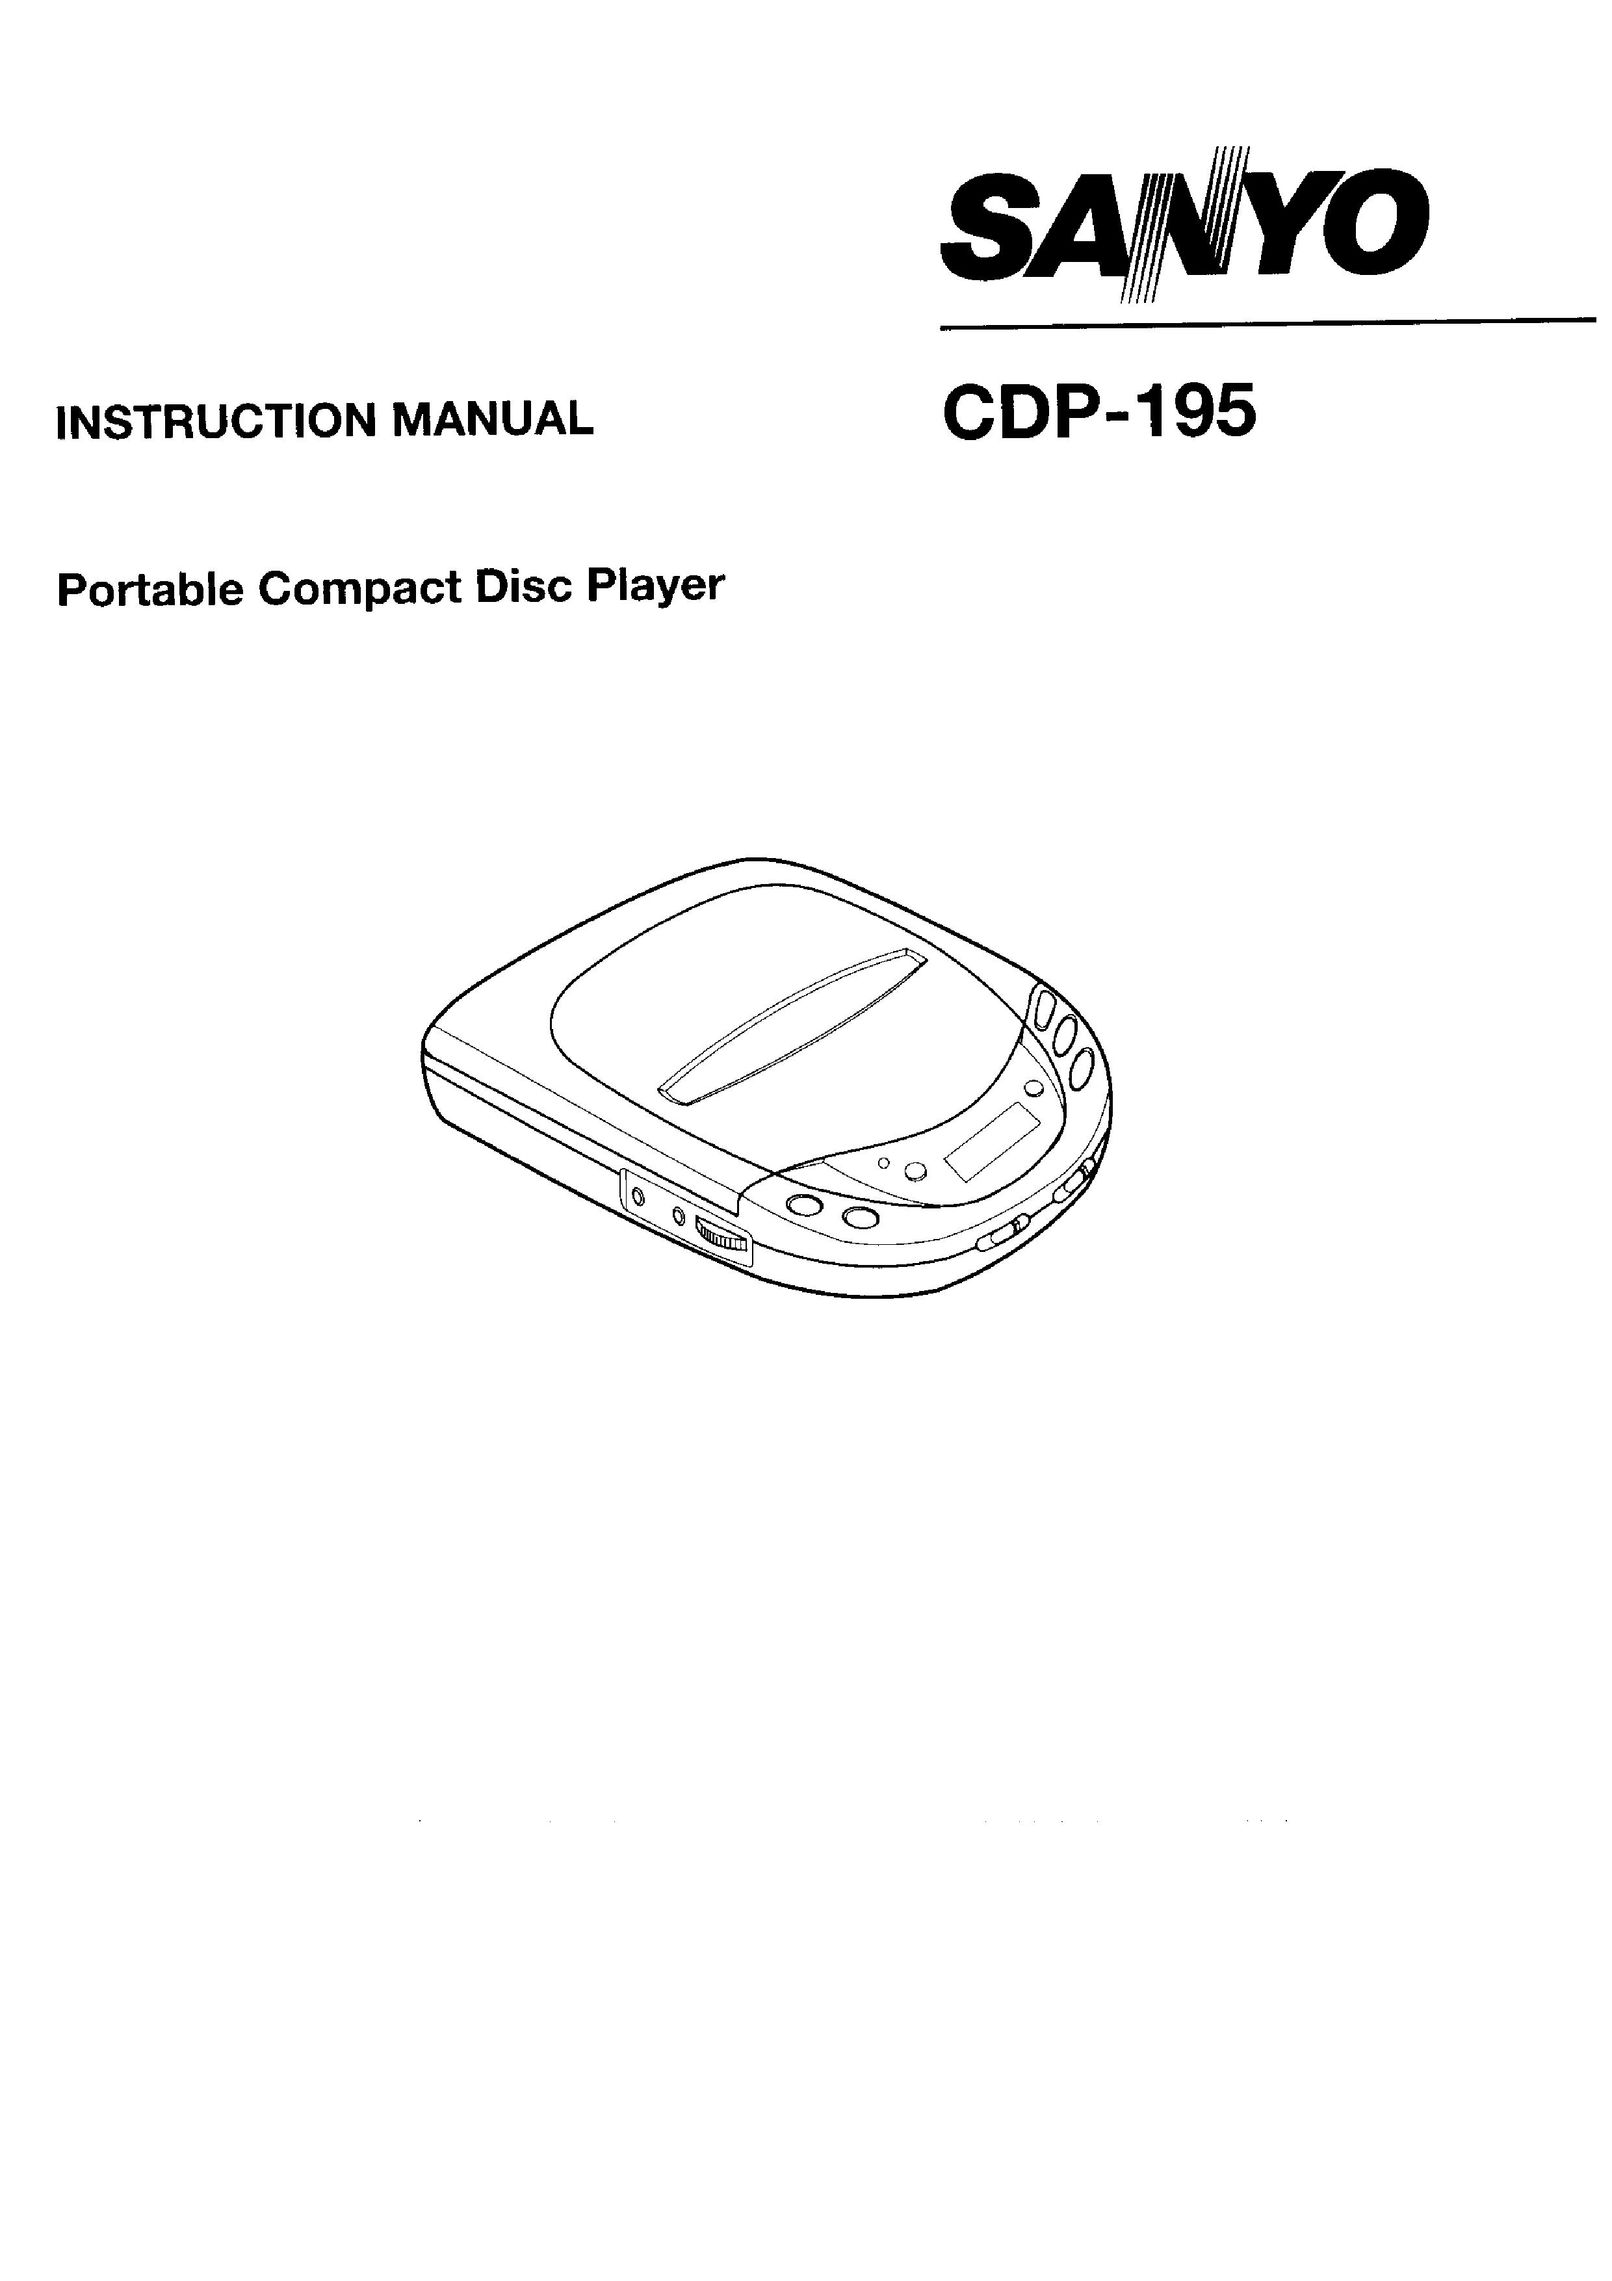 Sanyo cdp-195 Portable CD Player User Manual